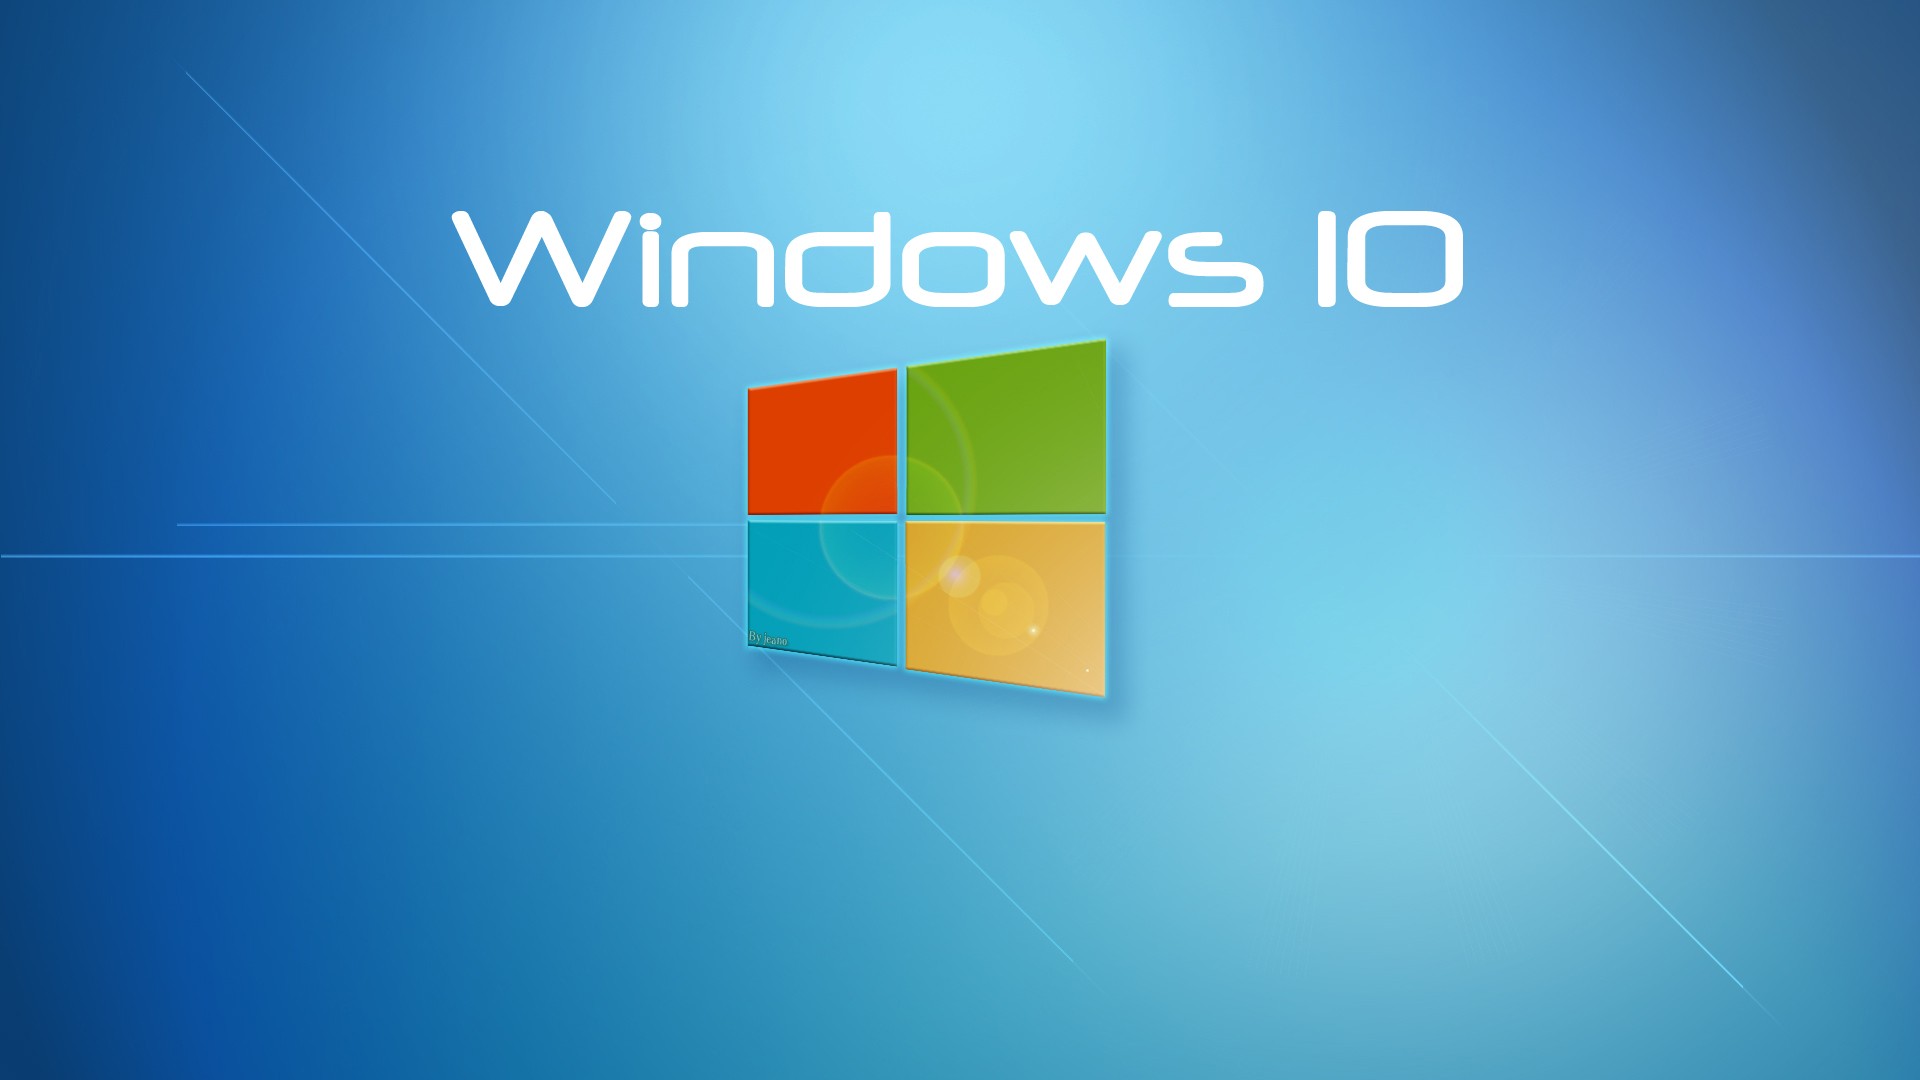 Free Download Windows 10 4k Wallpaper 1920x1080 For Your Desktop